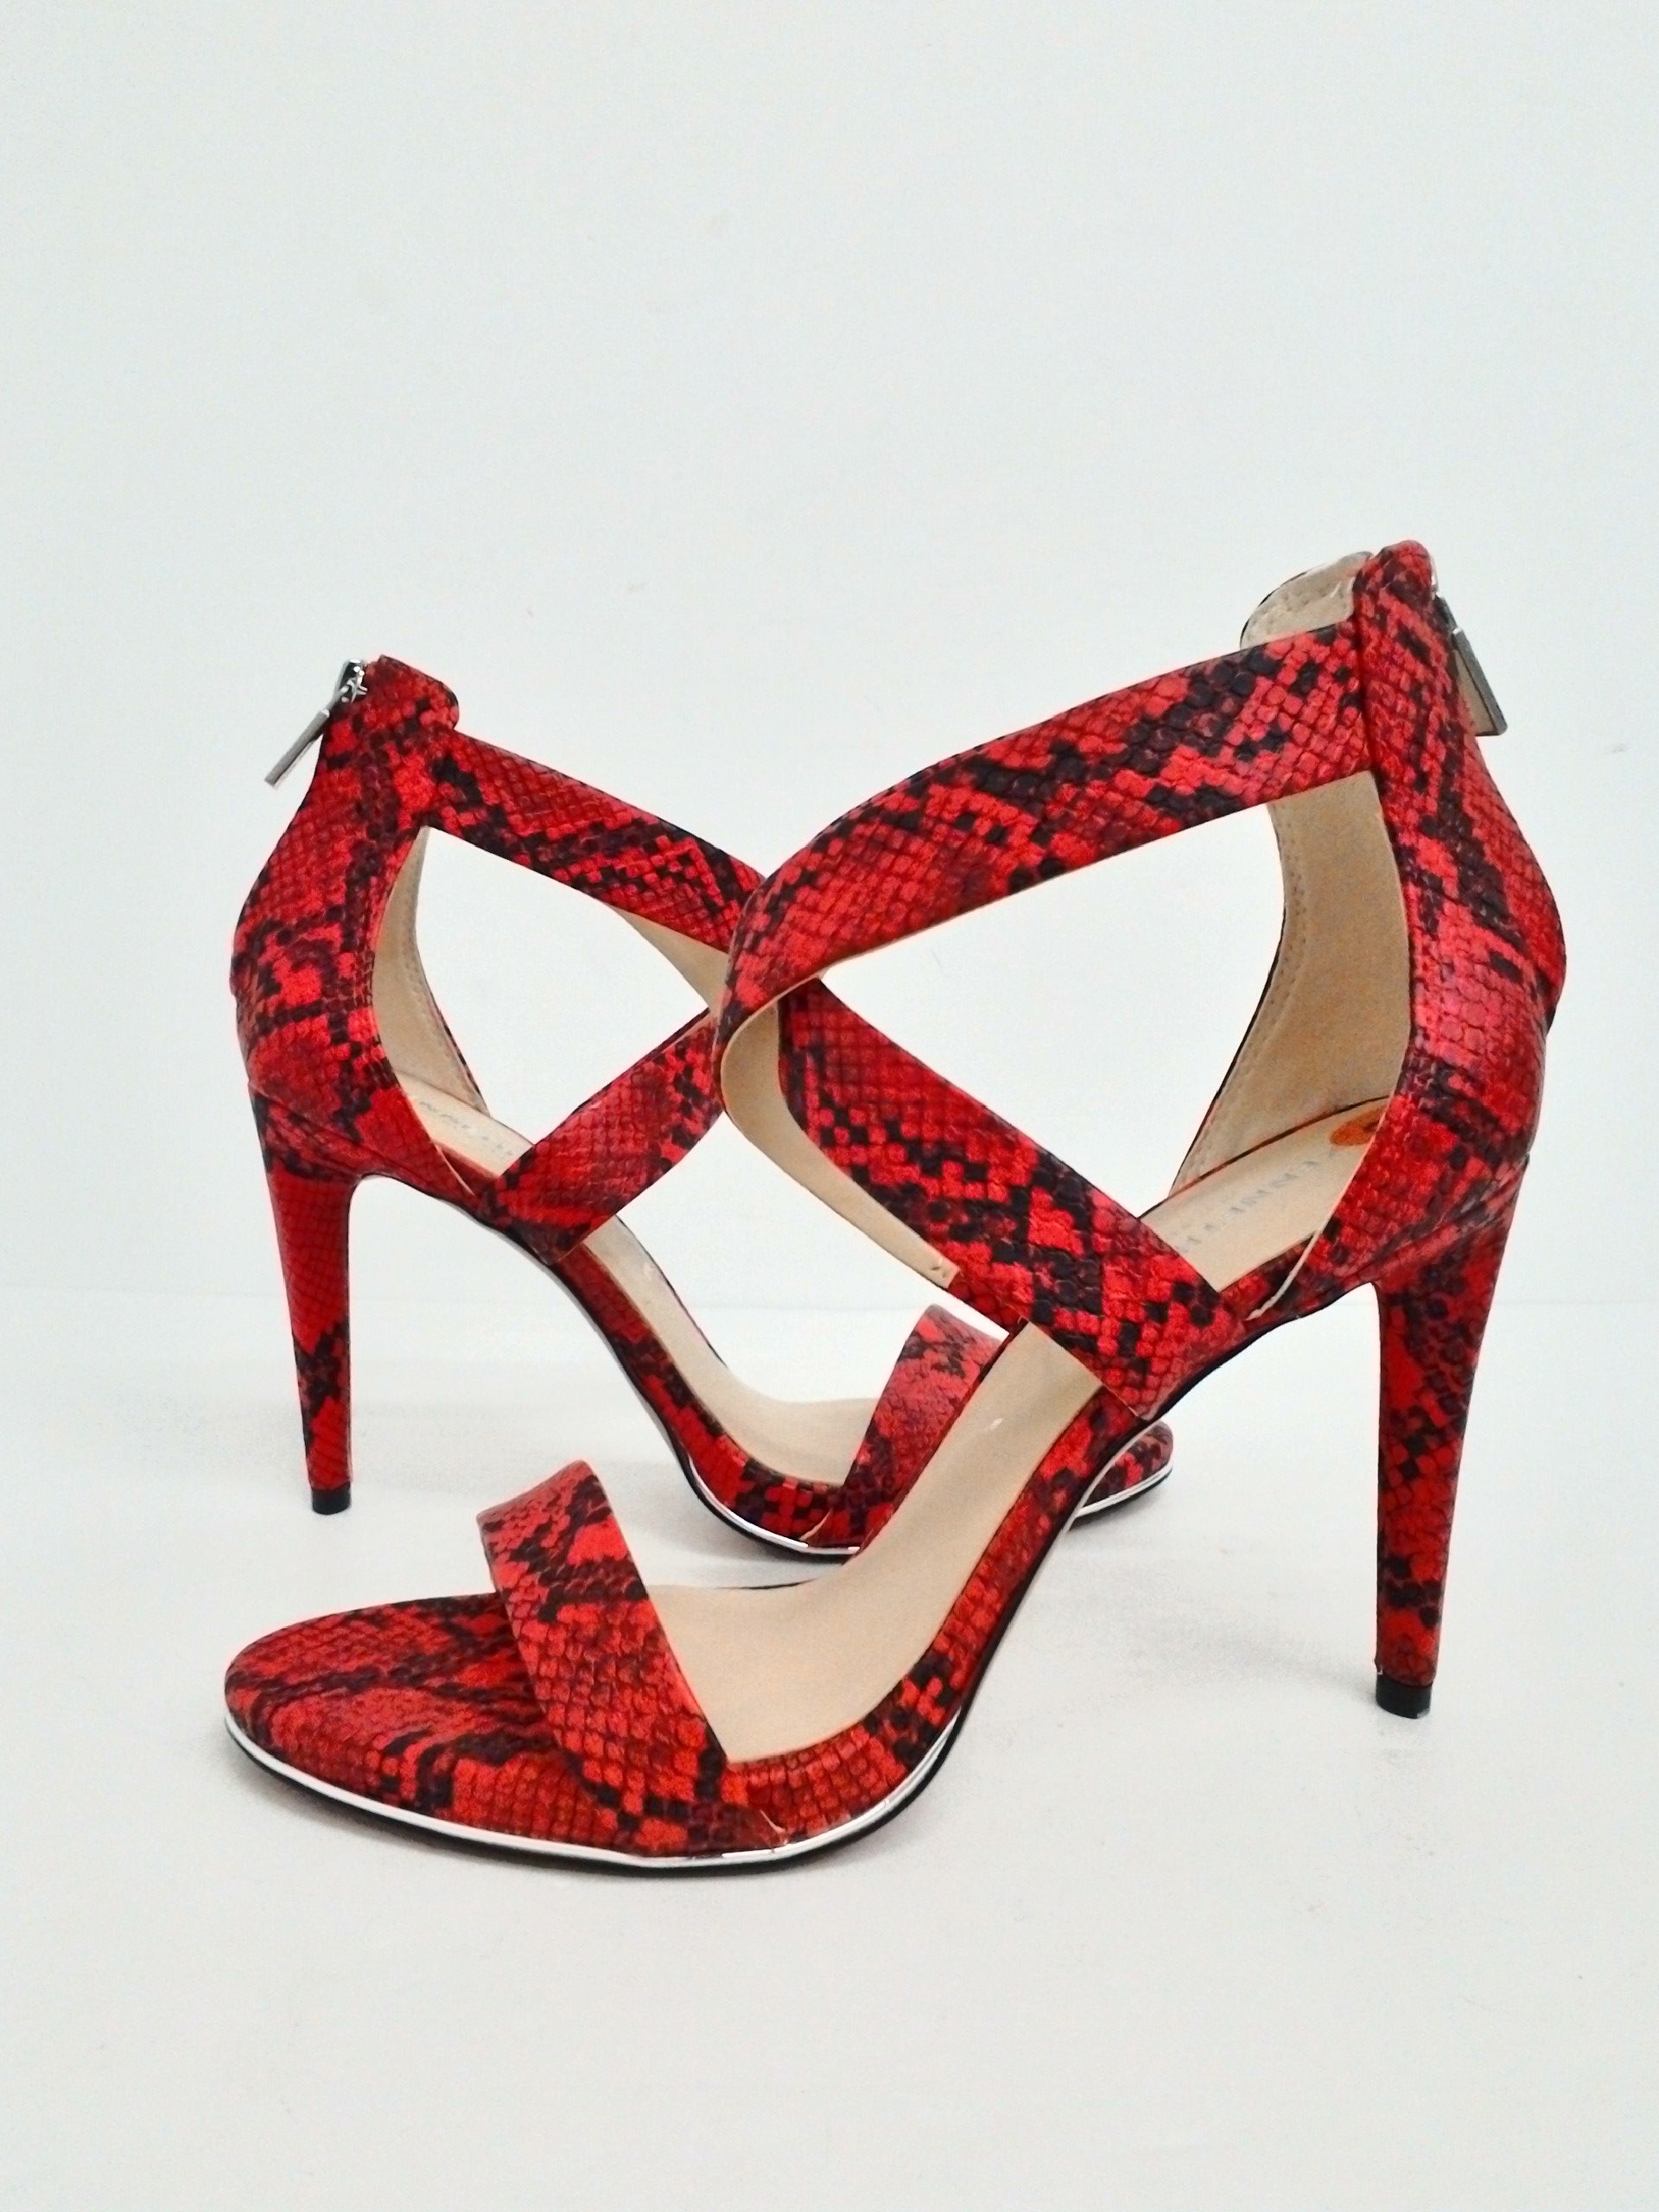 Kenneth Cole Women's Brooke Cross Sandal Red Snake Print Size 8M ...